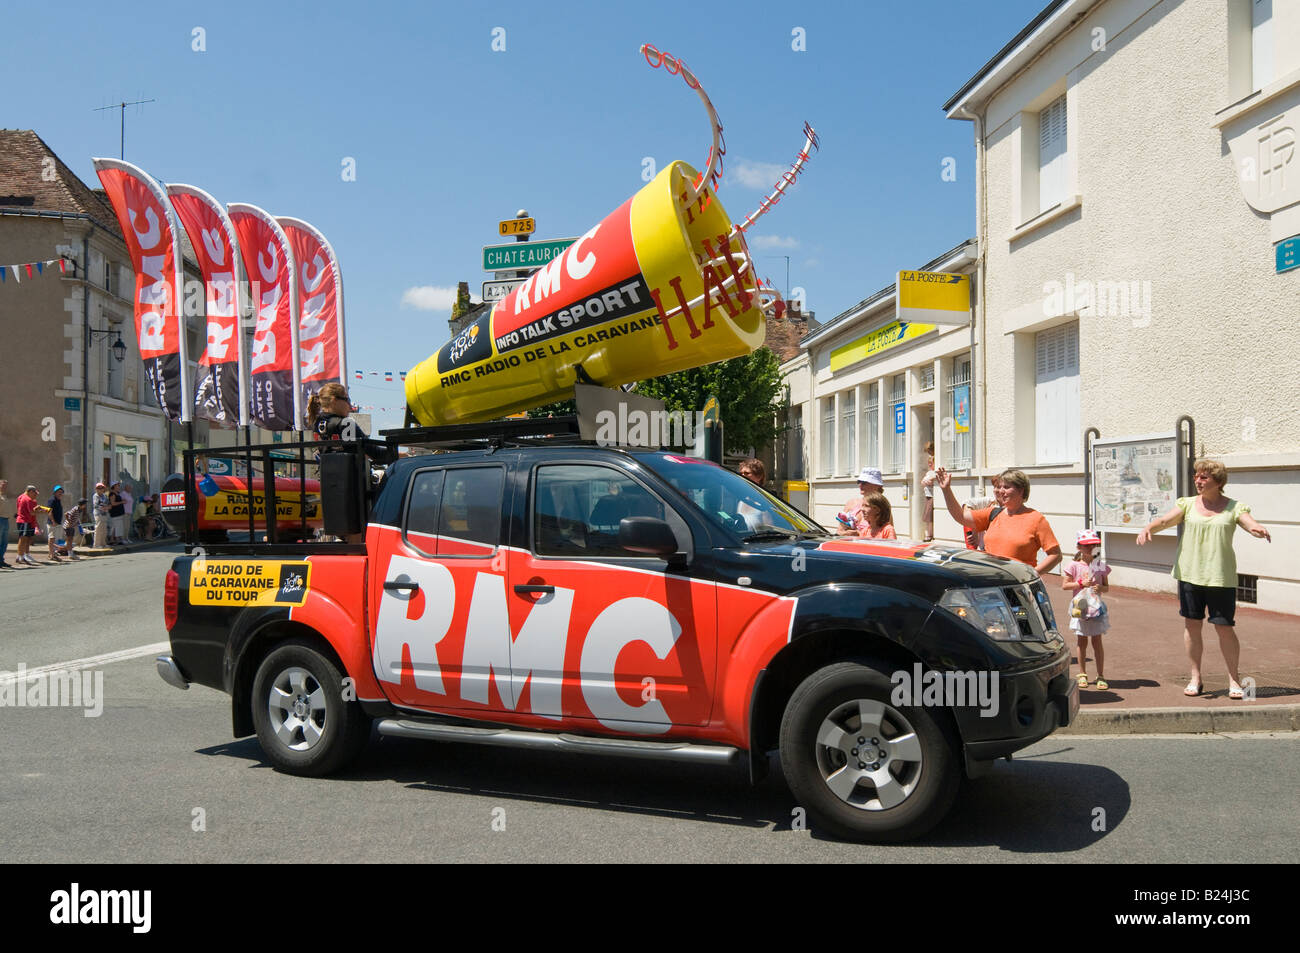 2008 Tour de France caravan - Nissan vehicle sponsored by "RMC" radio  station, France Stock Photo - Alamy